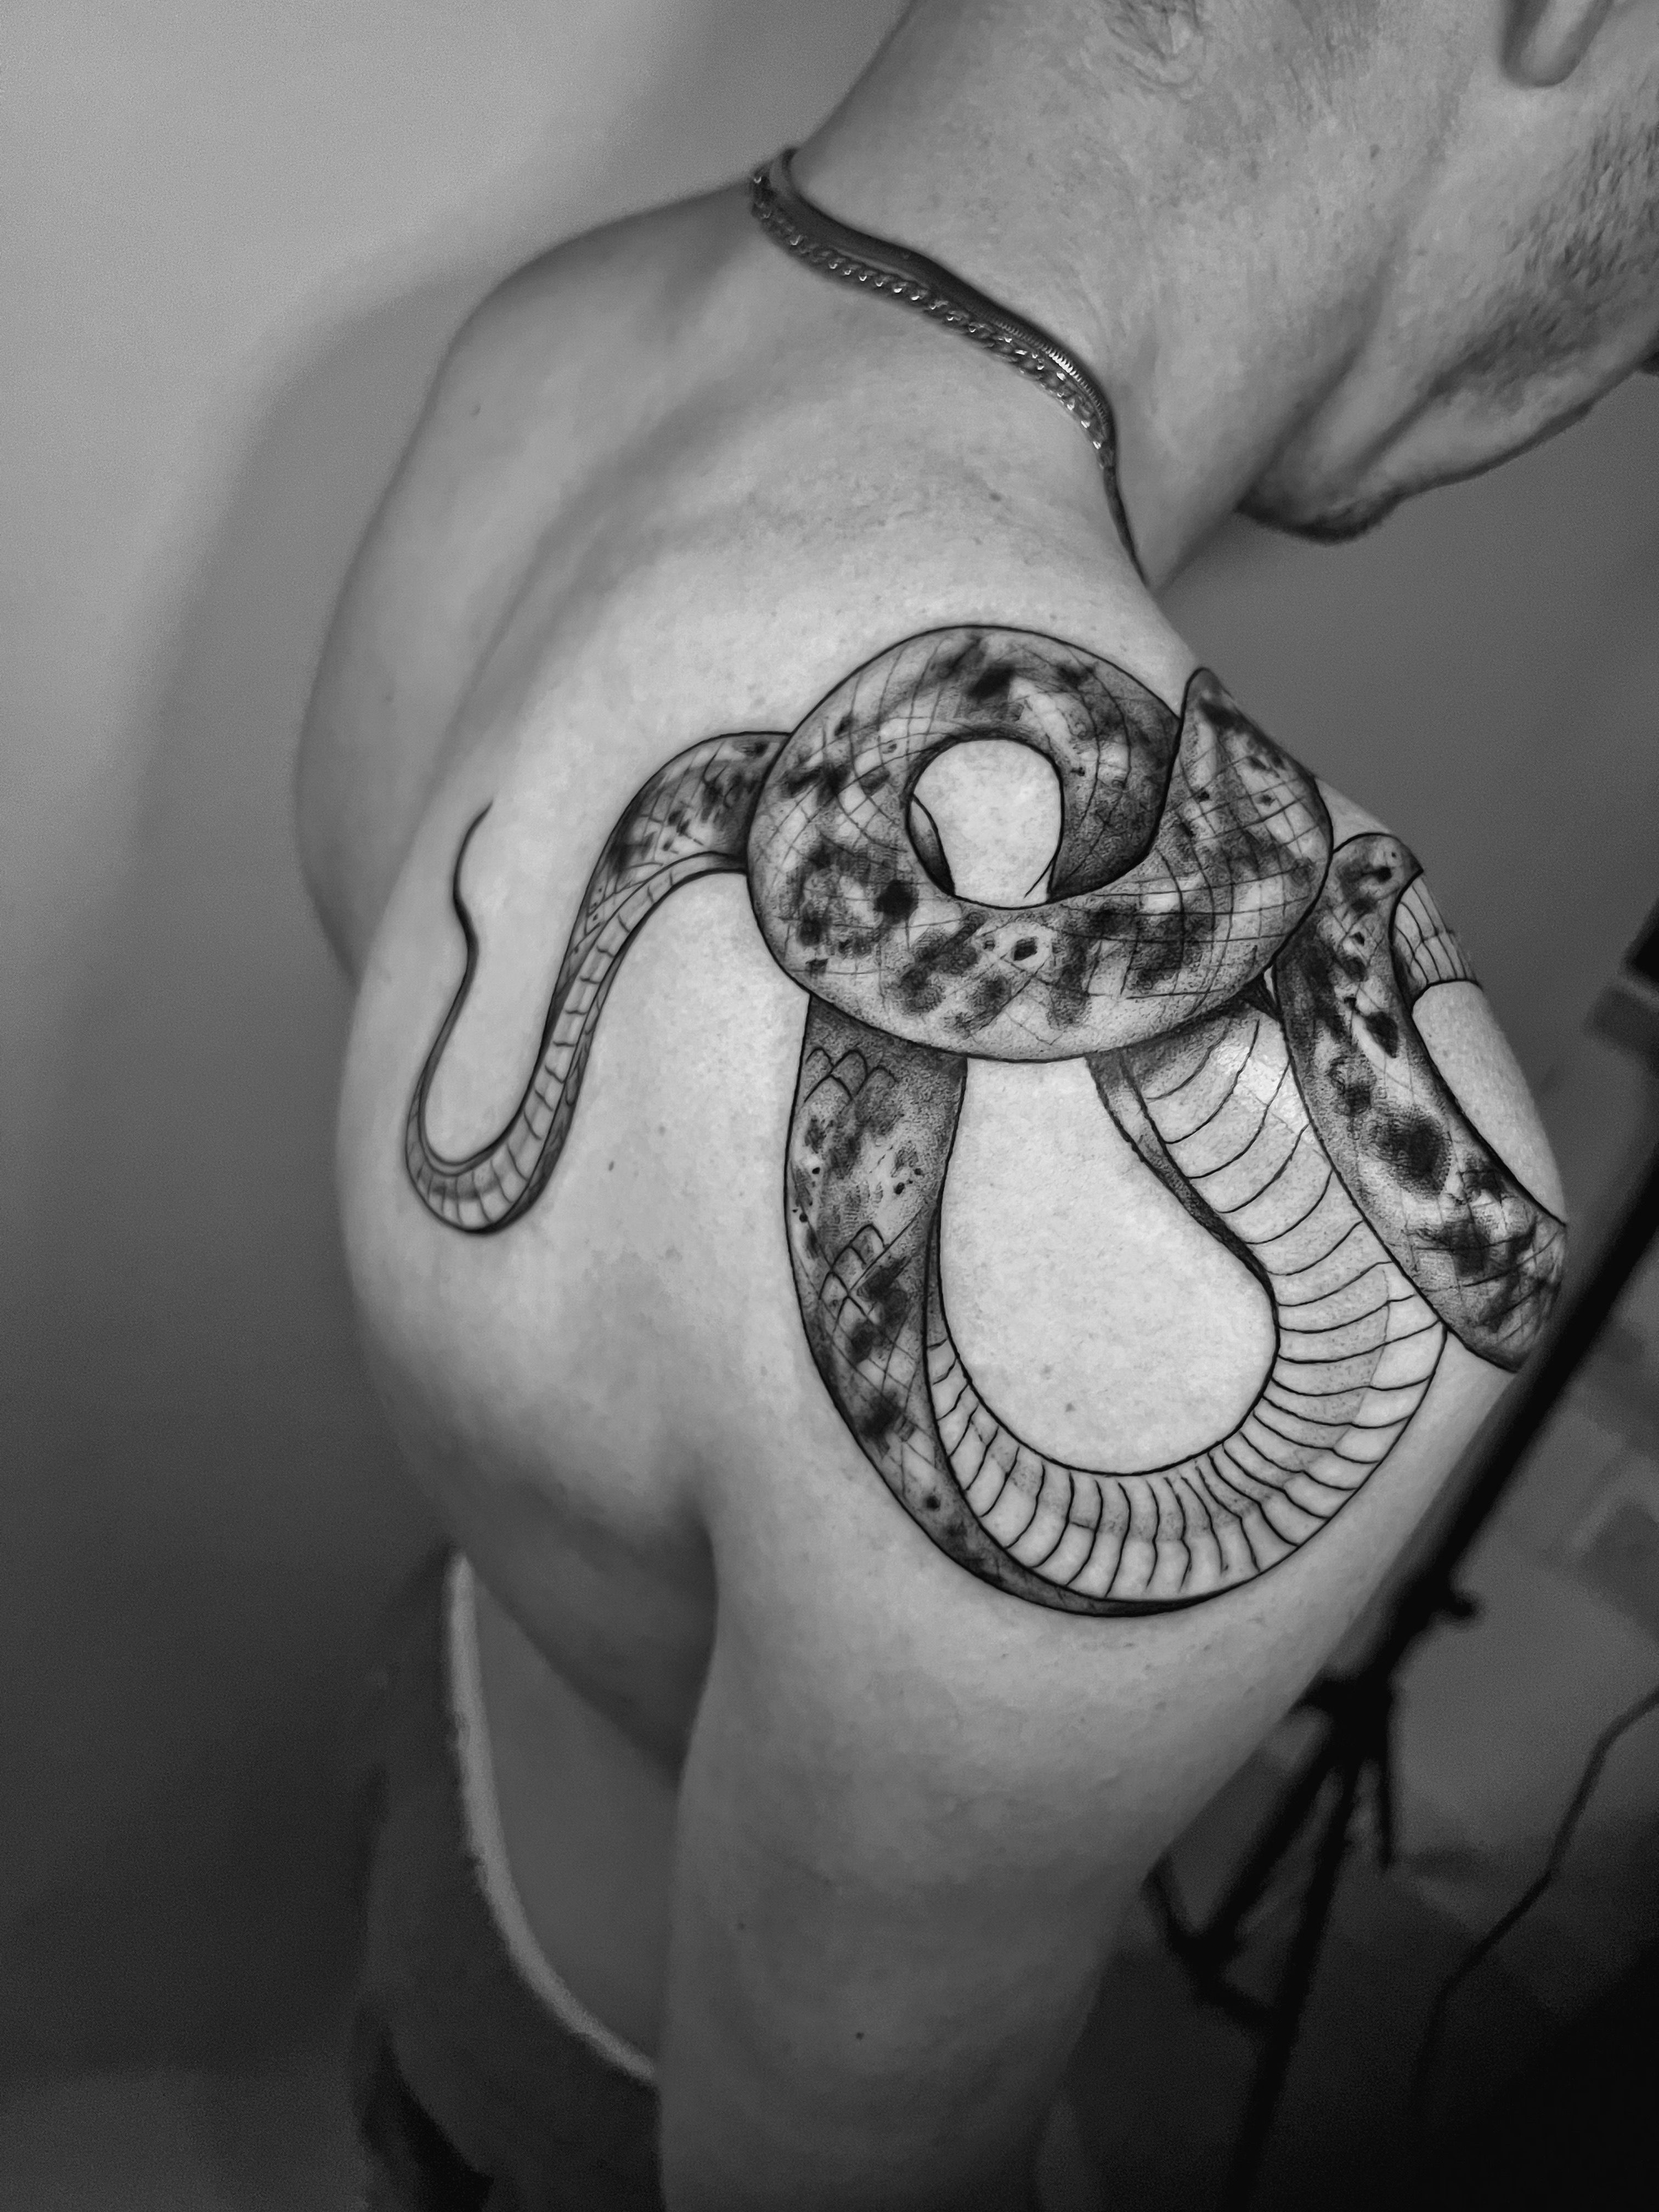 Single needle snake tattoo on the chest (healed).